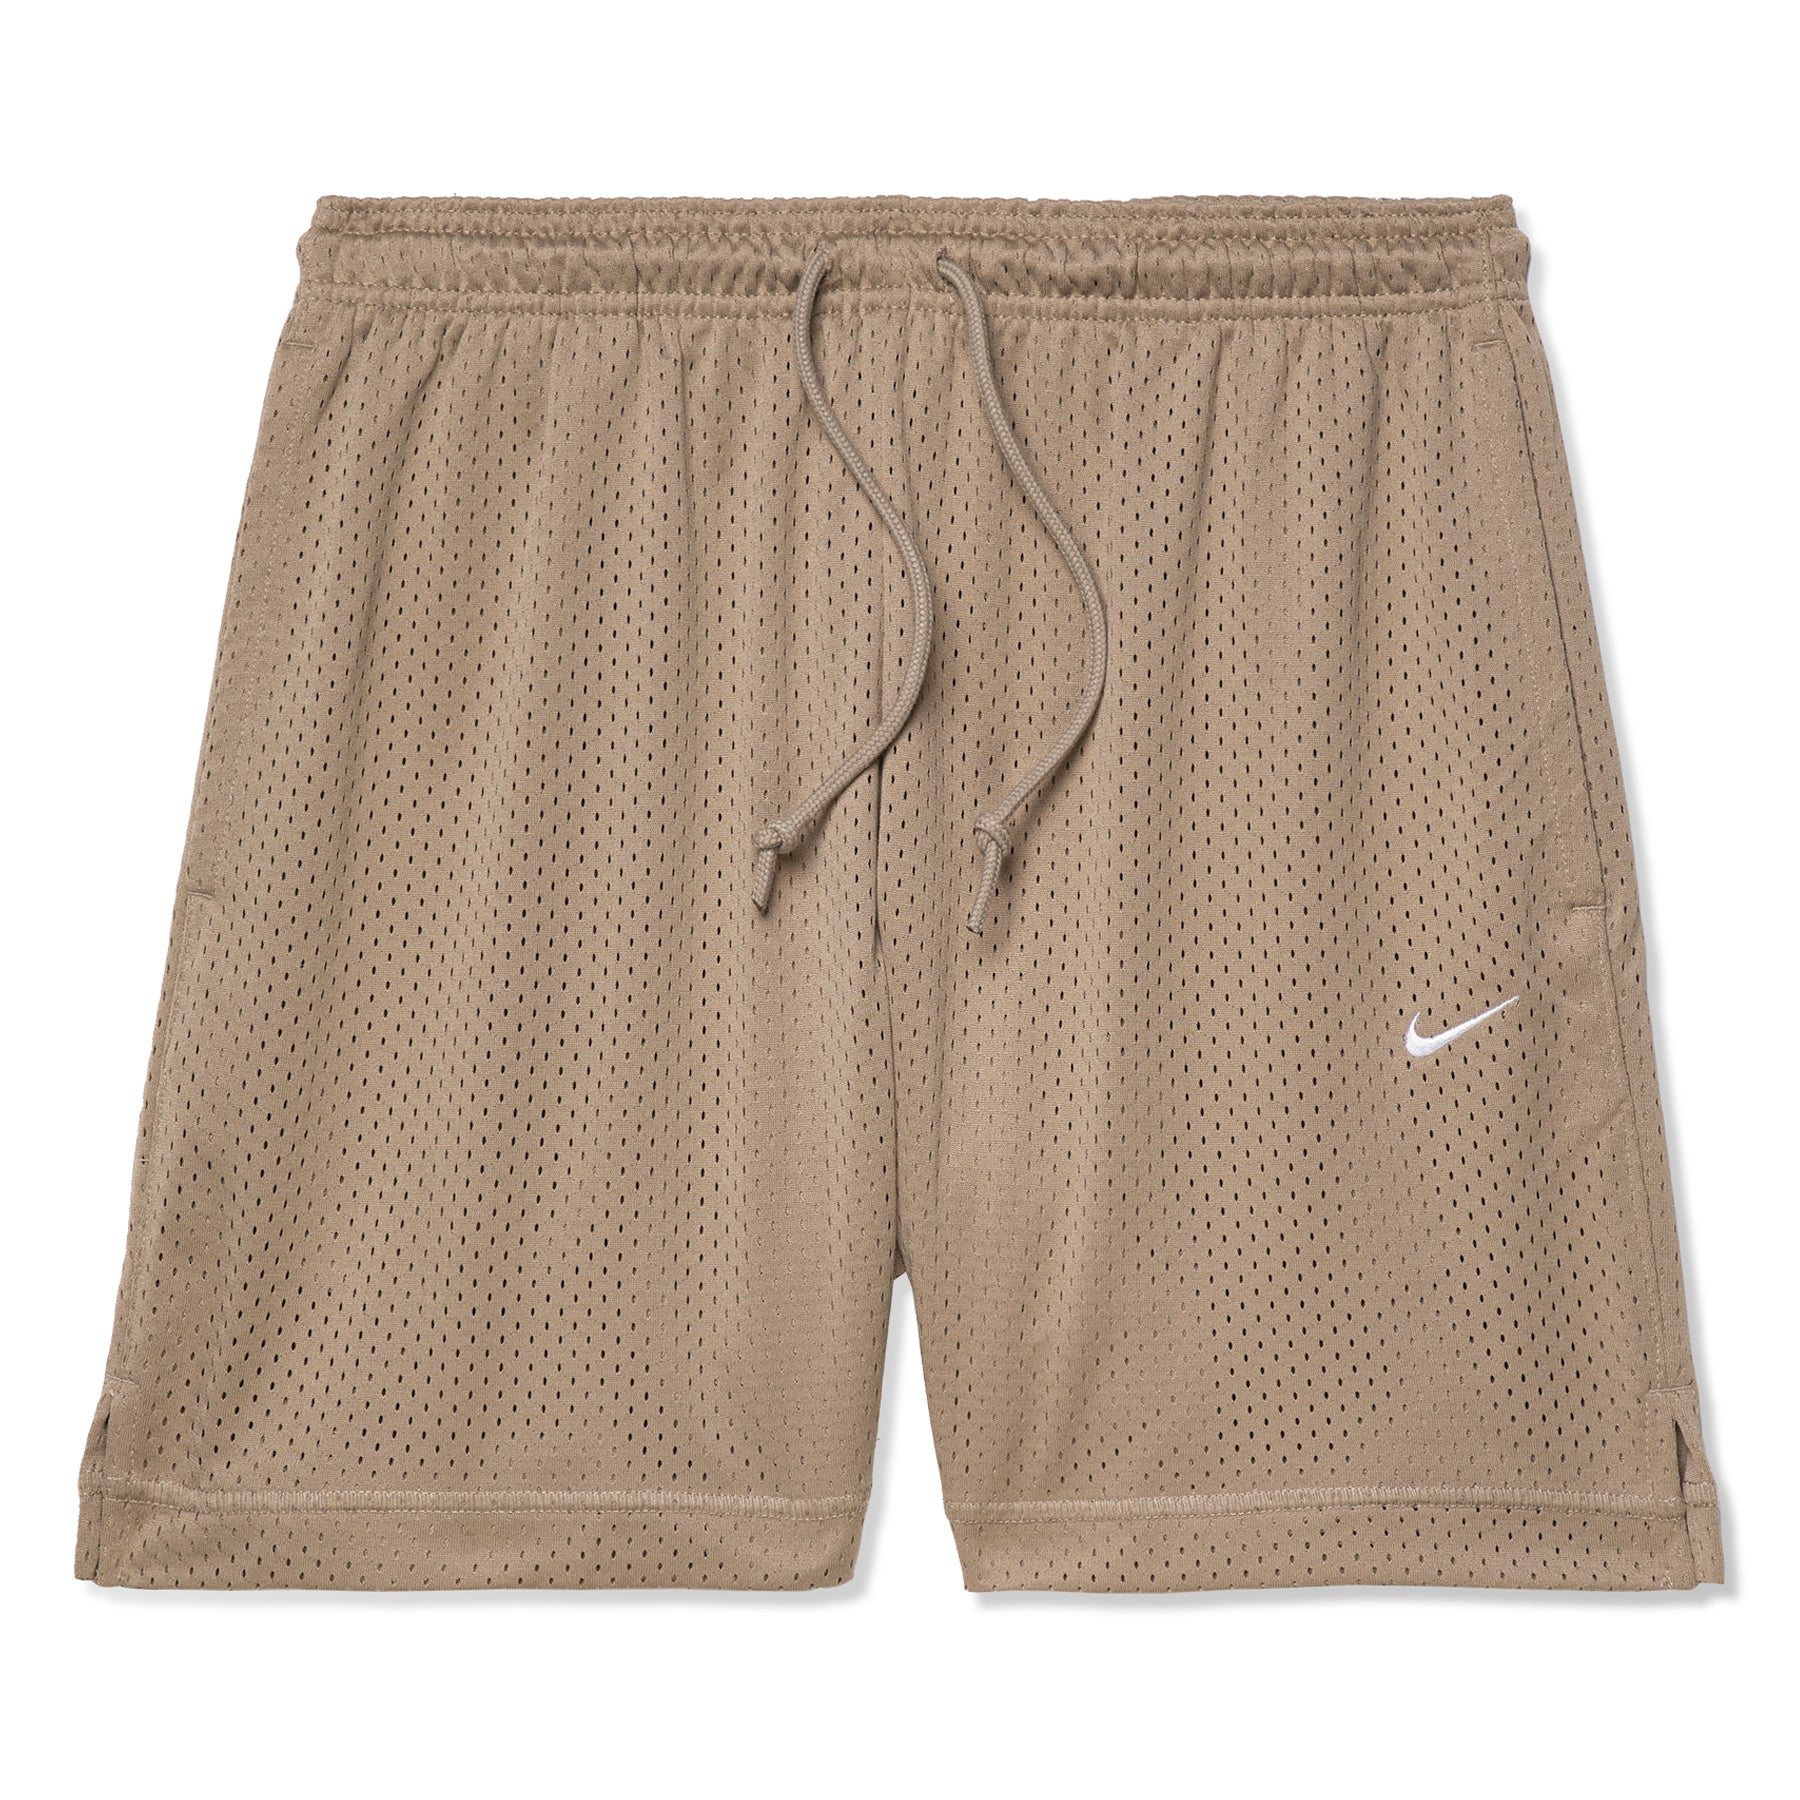 (Khaki/White) Shorts – Sportswear Mesh Concepts Nike